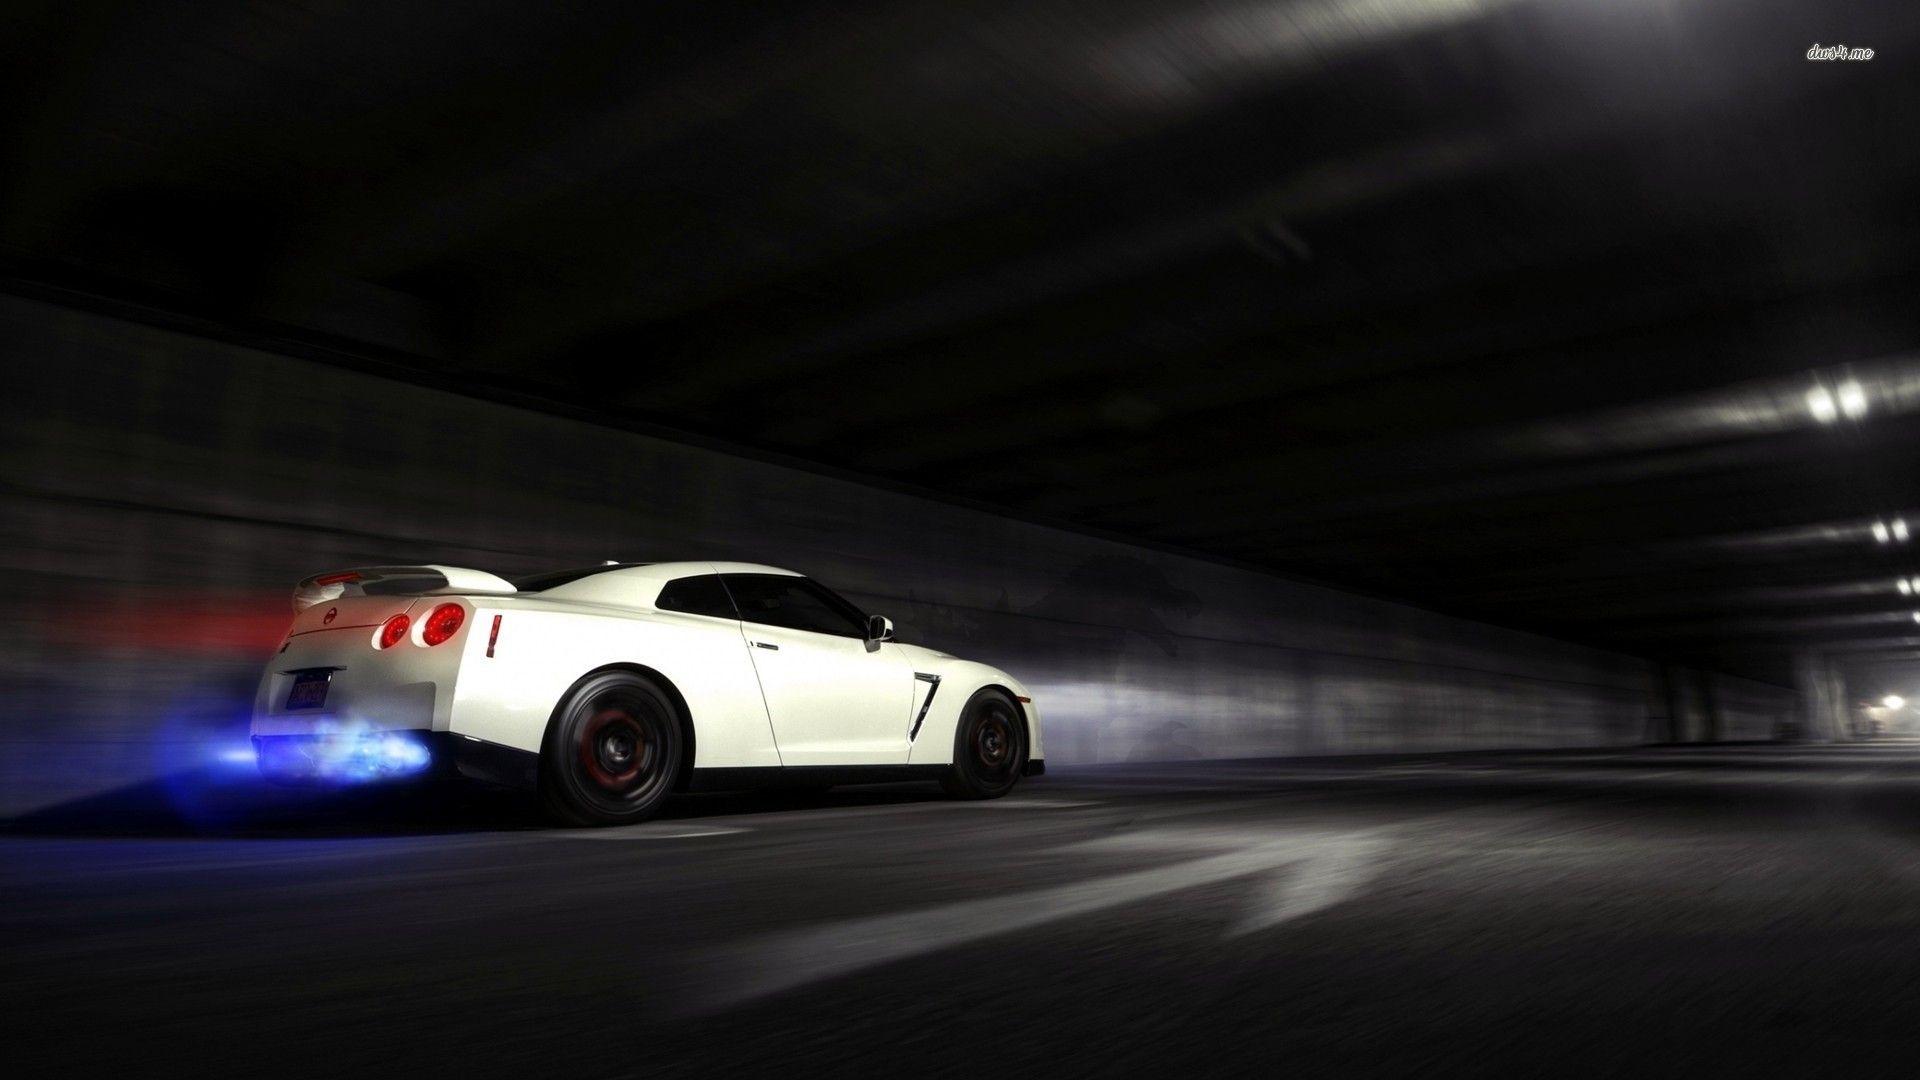 Nissan Skyline GT R Wallpaper High Definition. Nissan Skyline GT